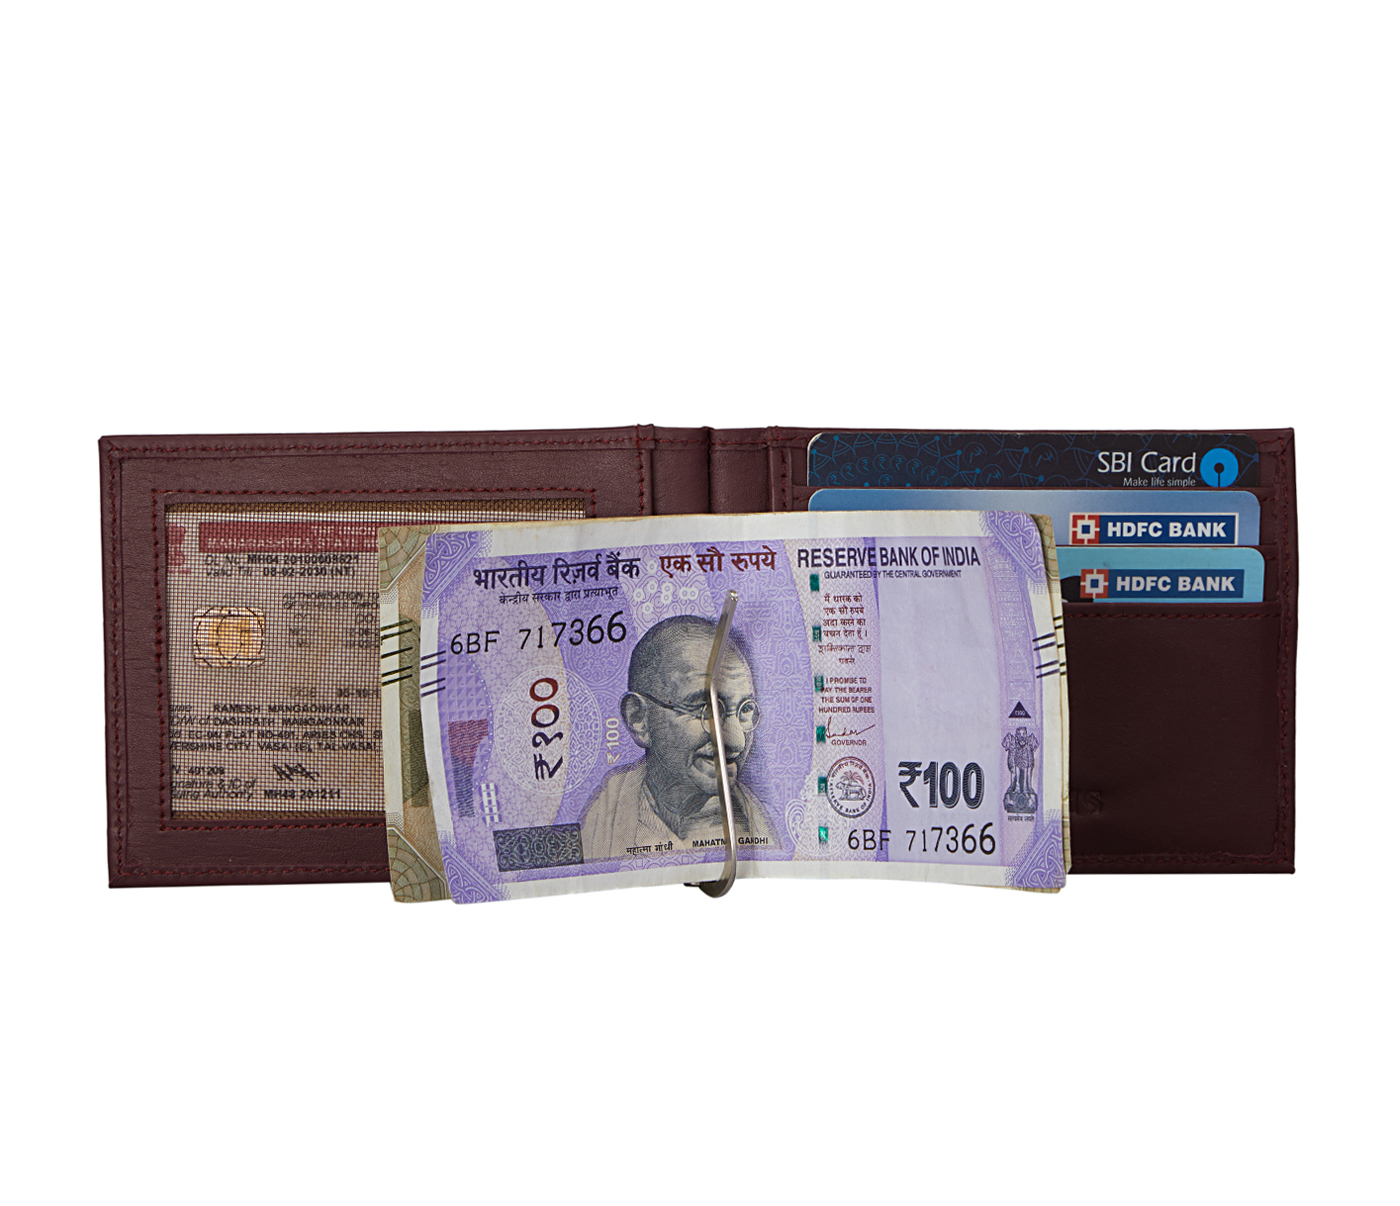 Wallet-Carl-Men's money clip cum card case wallet in Genuine Leather - Wine